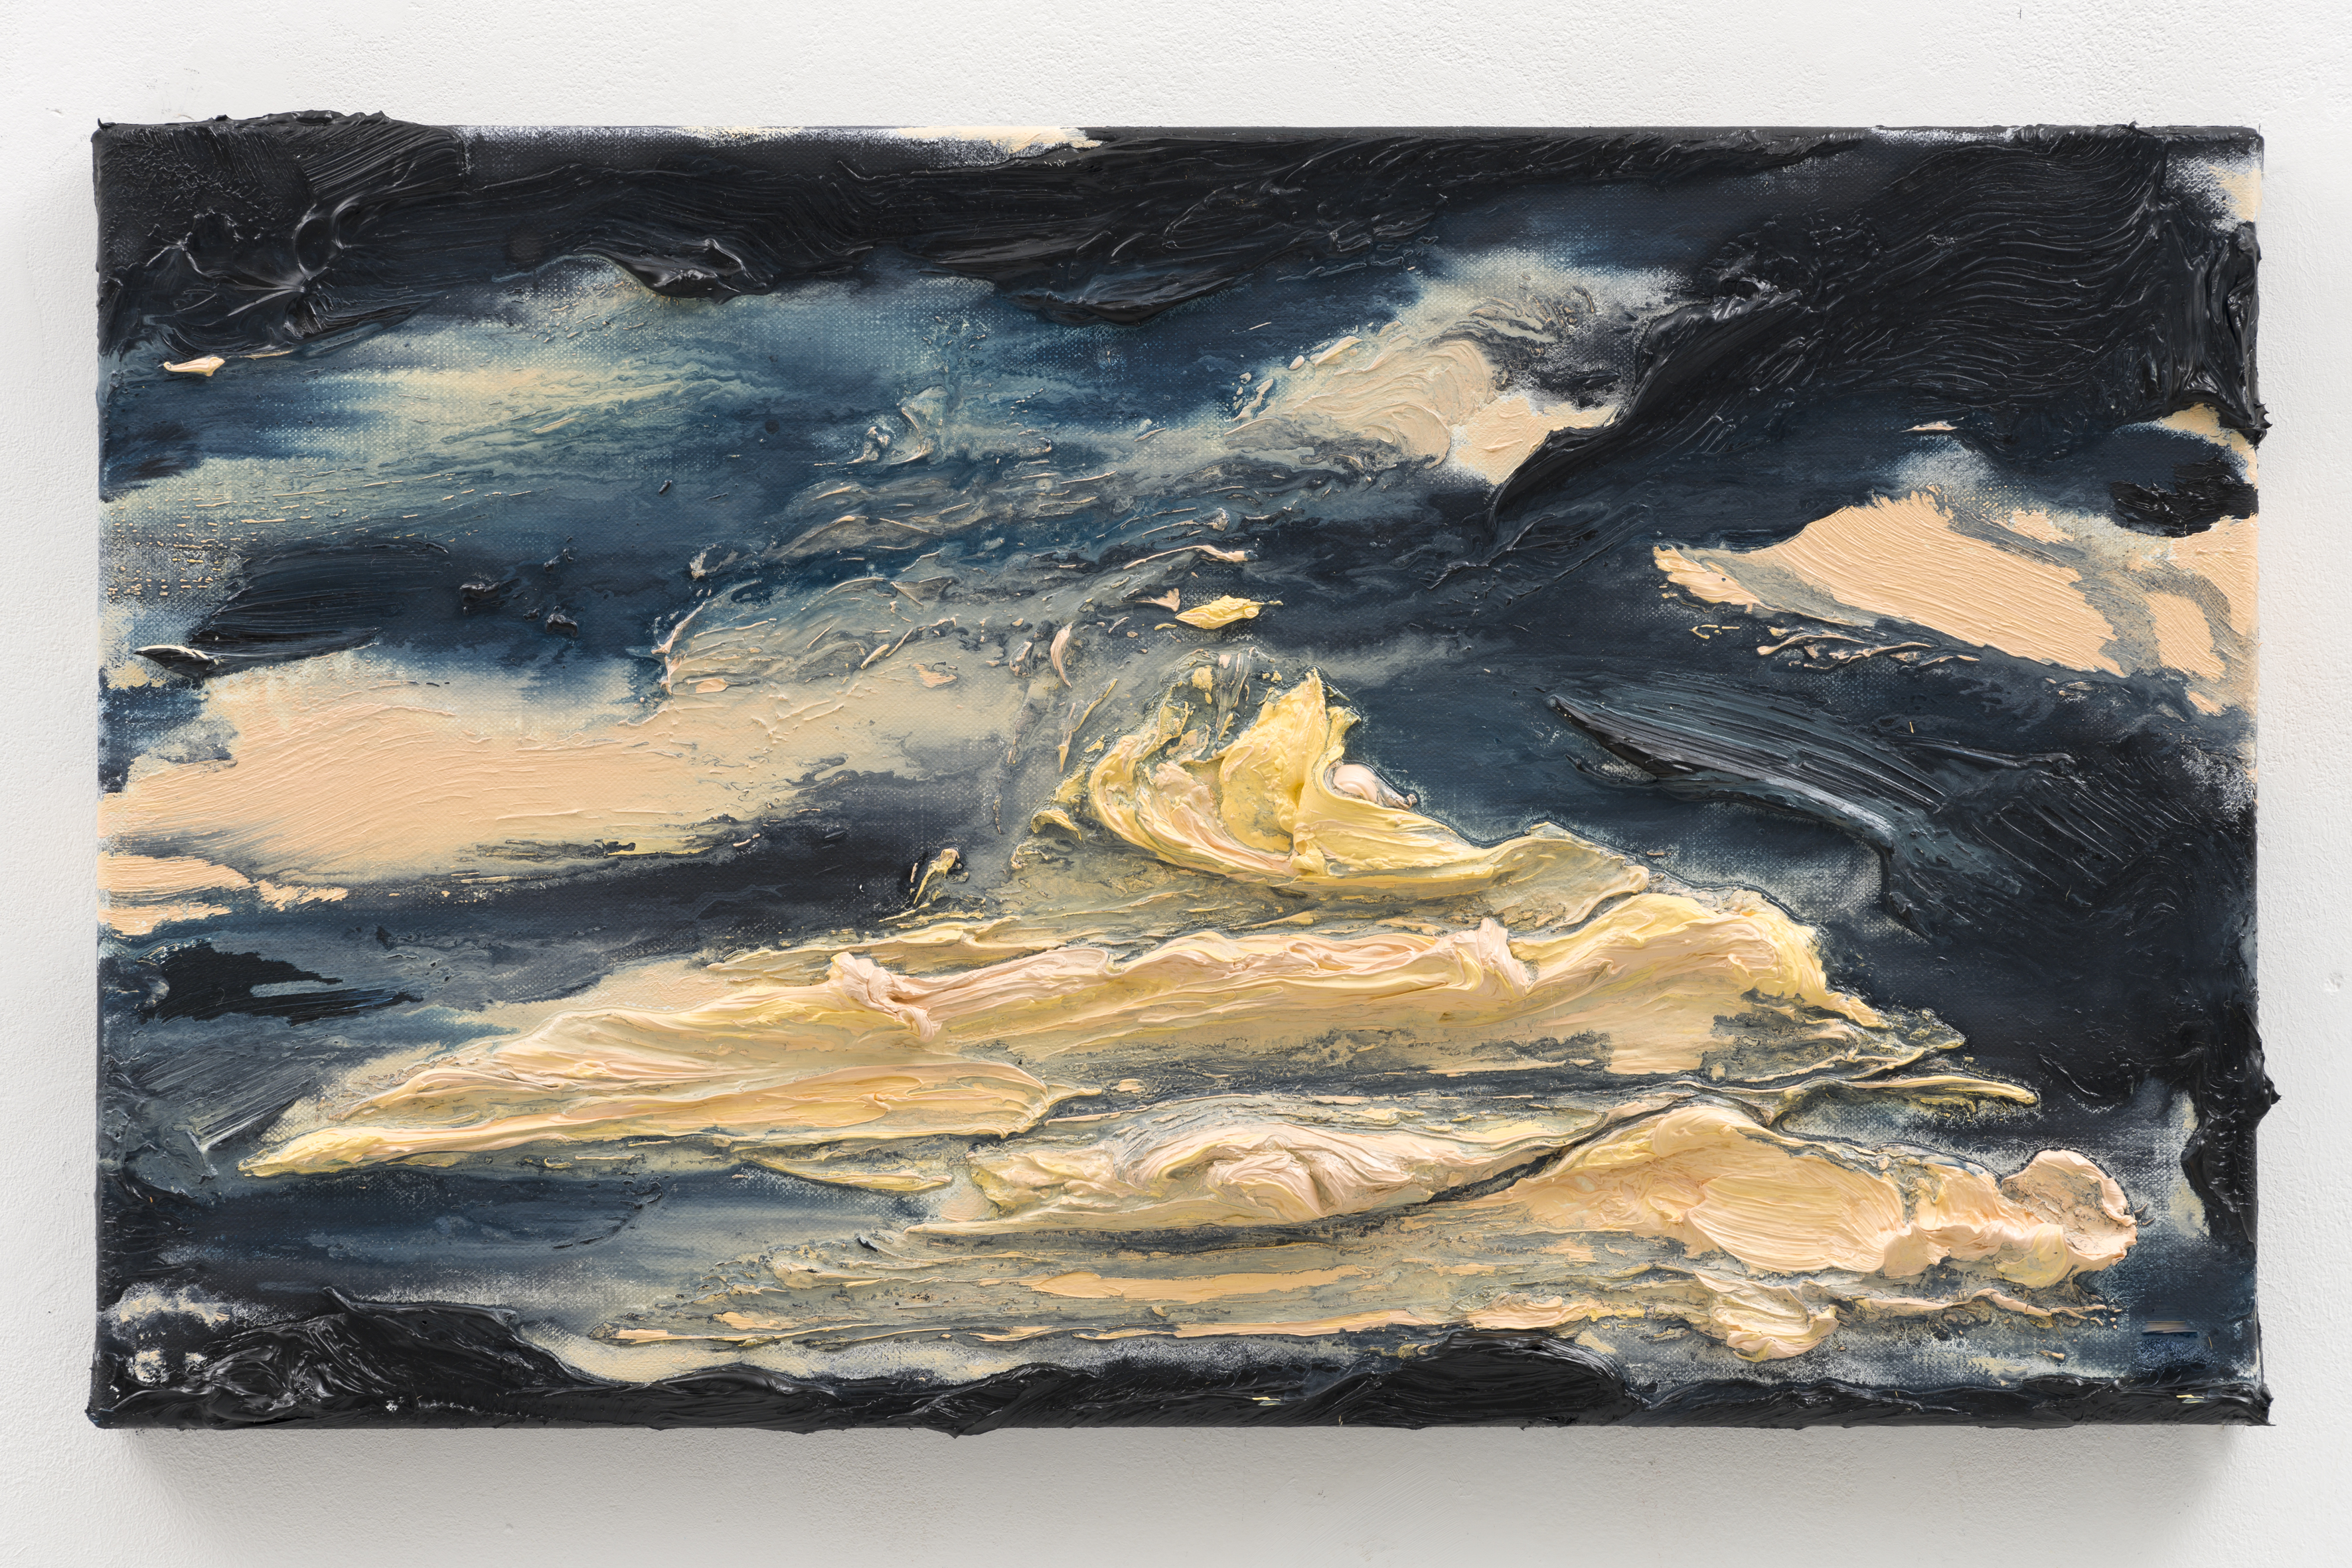 "Night Rises, Turrells Partituur II", 30 x 50 cm., oil on linen 2020 (Berlin)